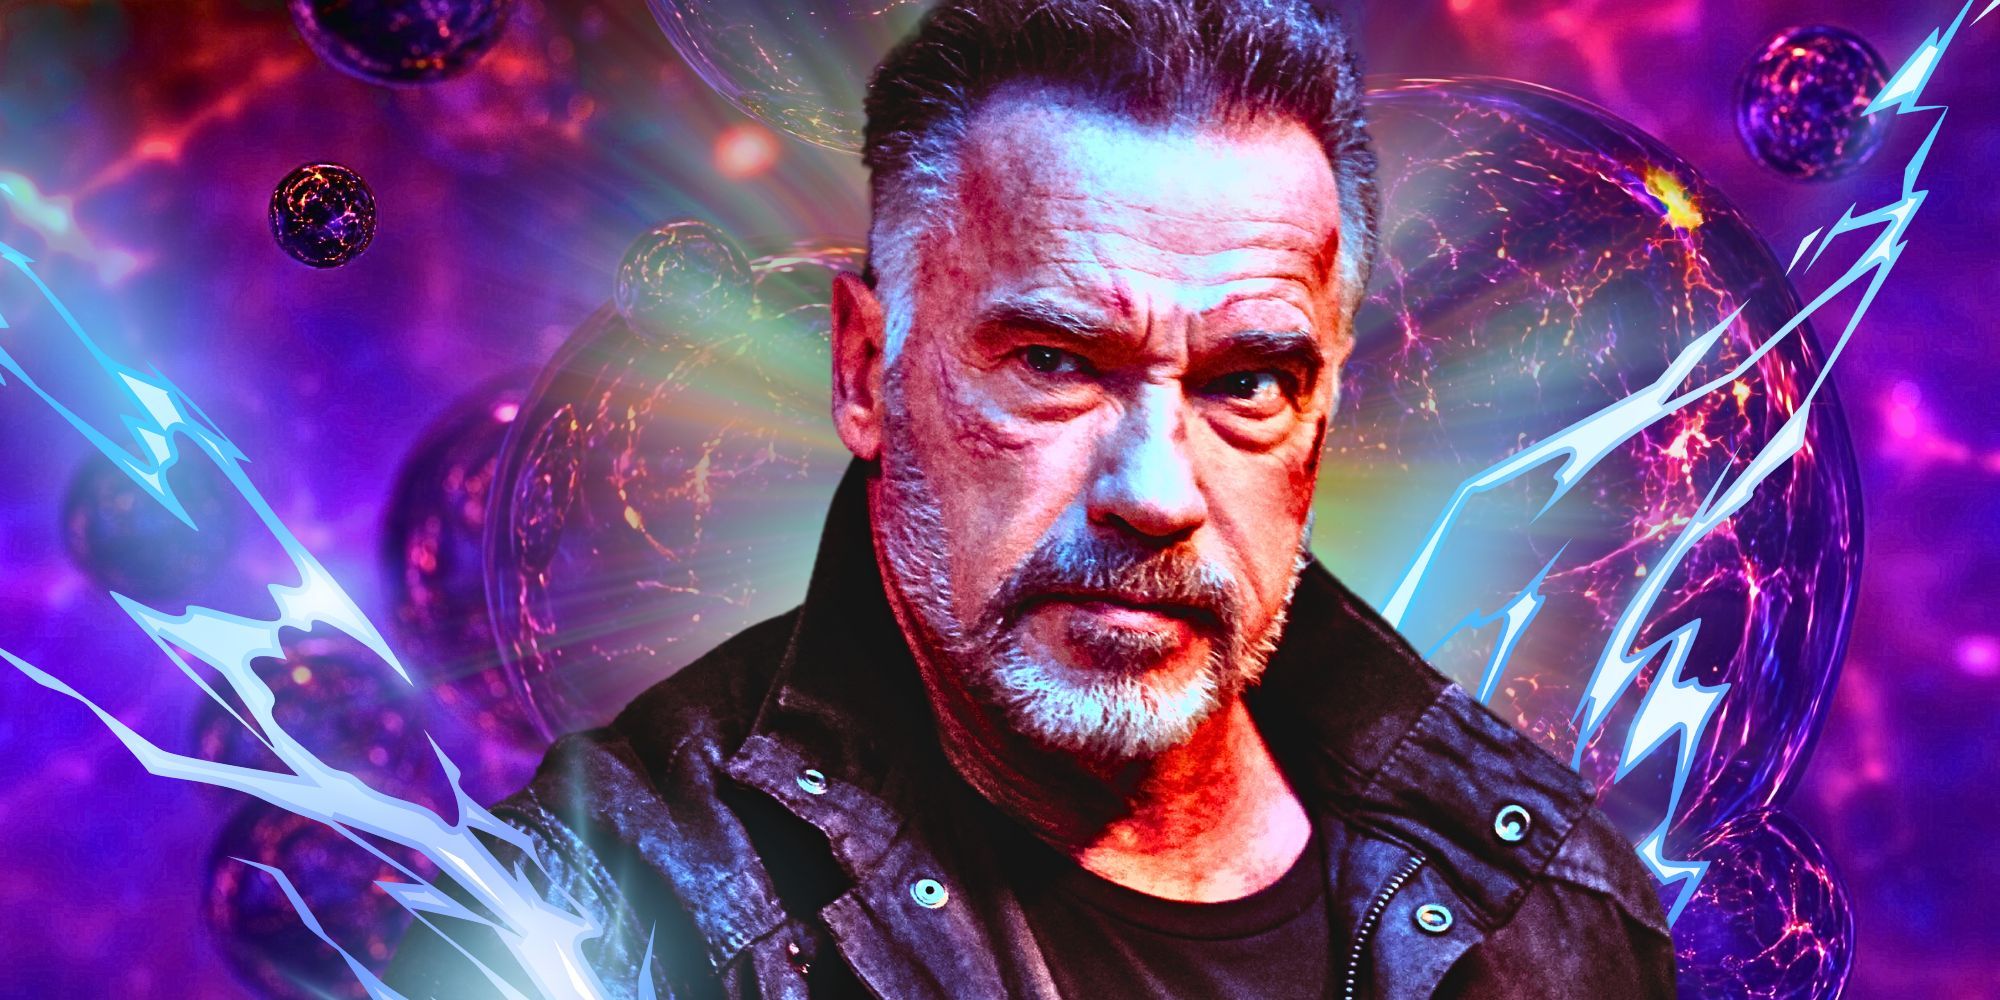 Arnold Schwarzenegger in Terminator: Dark Fate in front of a sci-fi background